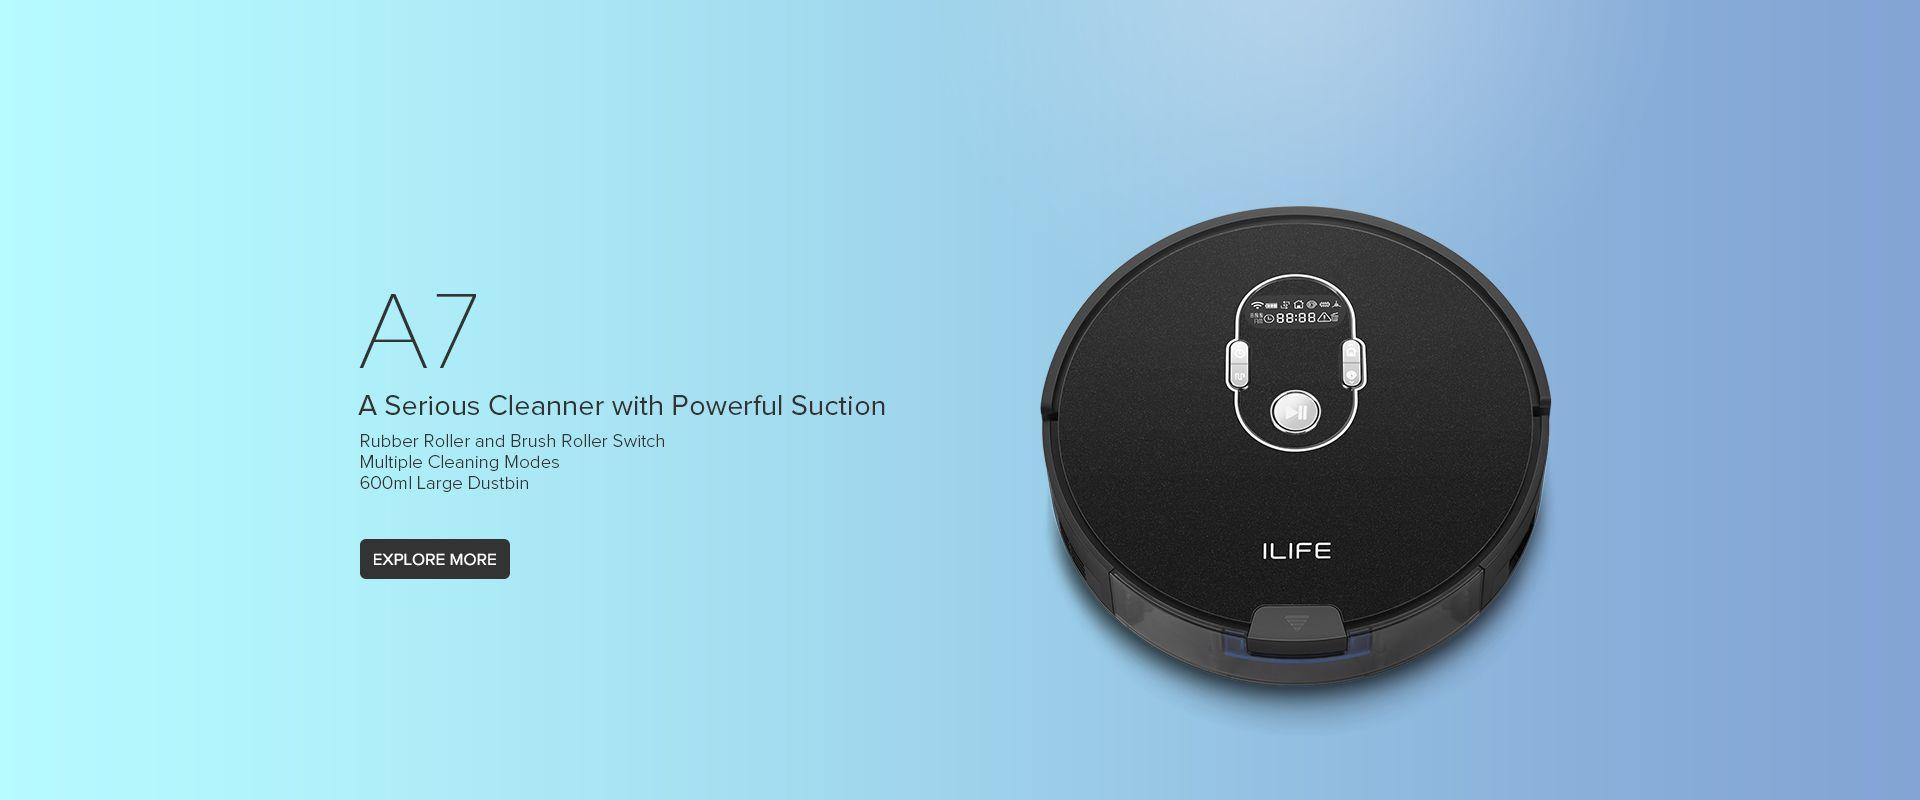 iLife Logo - ILIFE ROBOT. Robot Vacuum Cleaners. Smart Robotic Vacuums